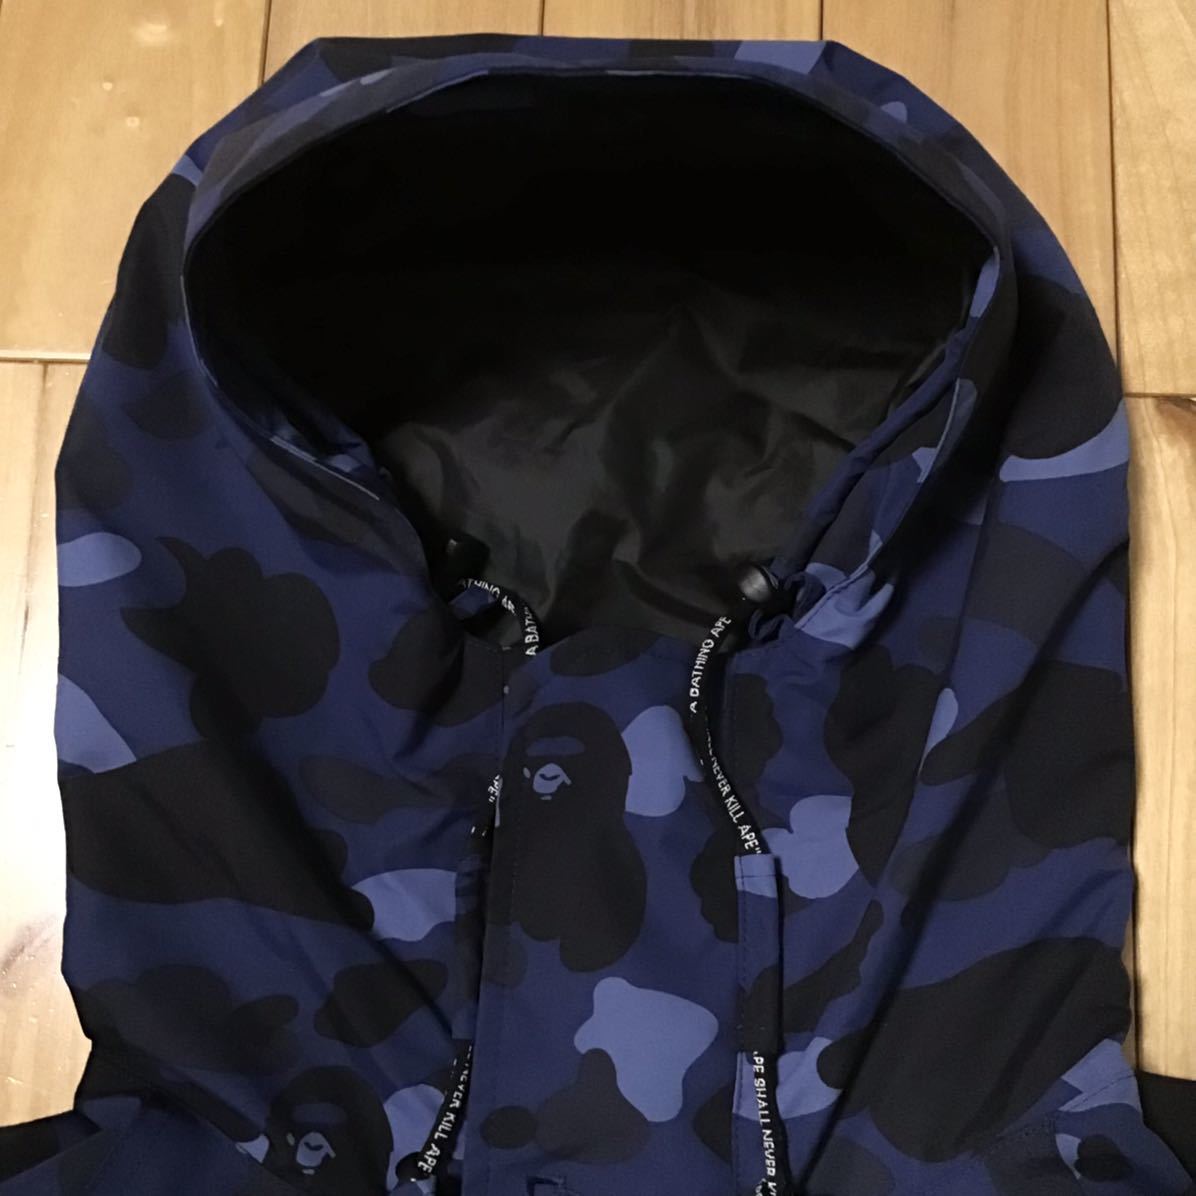 Blue camo スノボジャケット Mサイズ a bathing ape BAPE snowboard jacket エイプ ベイプ  アベイシングエイプ 迷彩 ブルーカモ t888